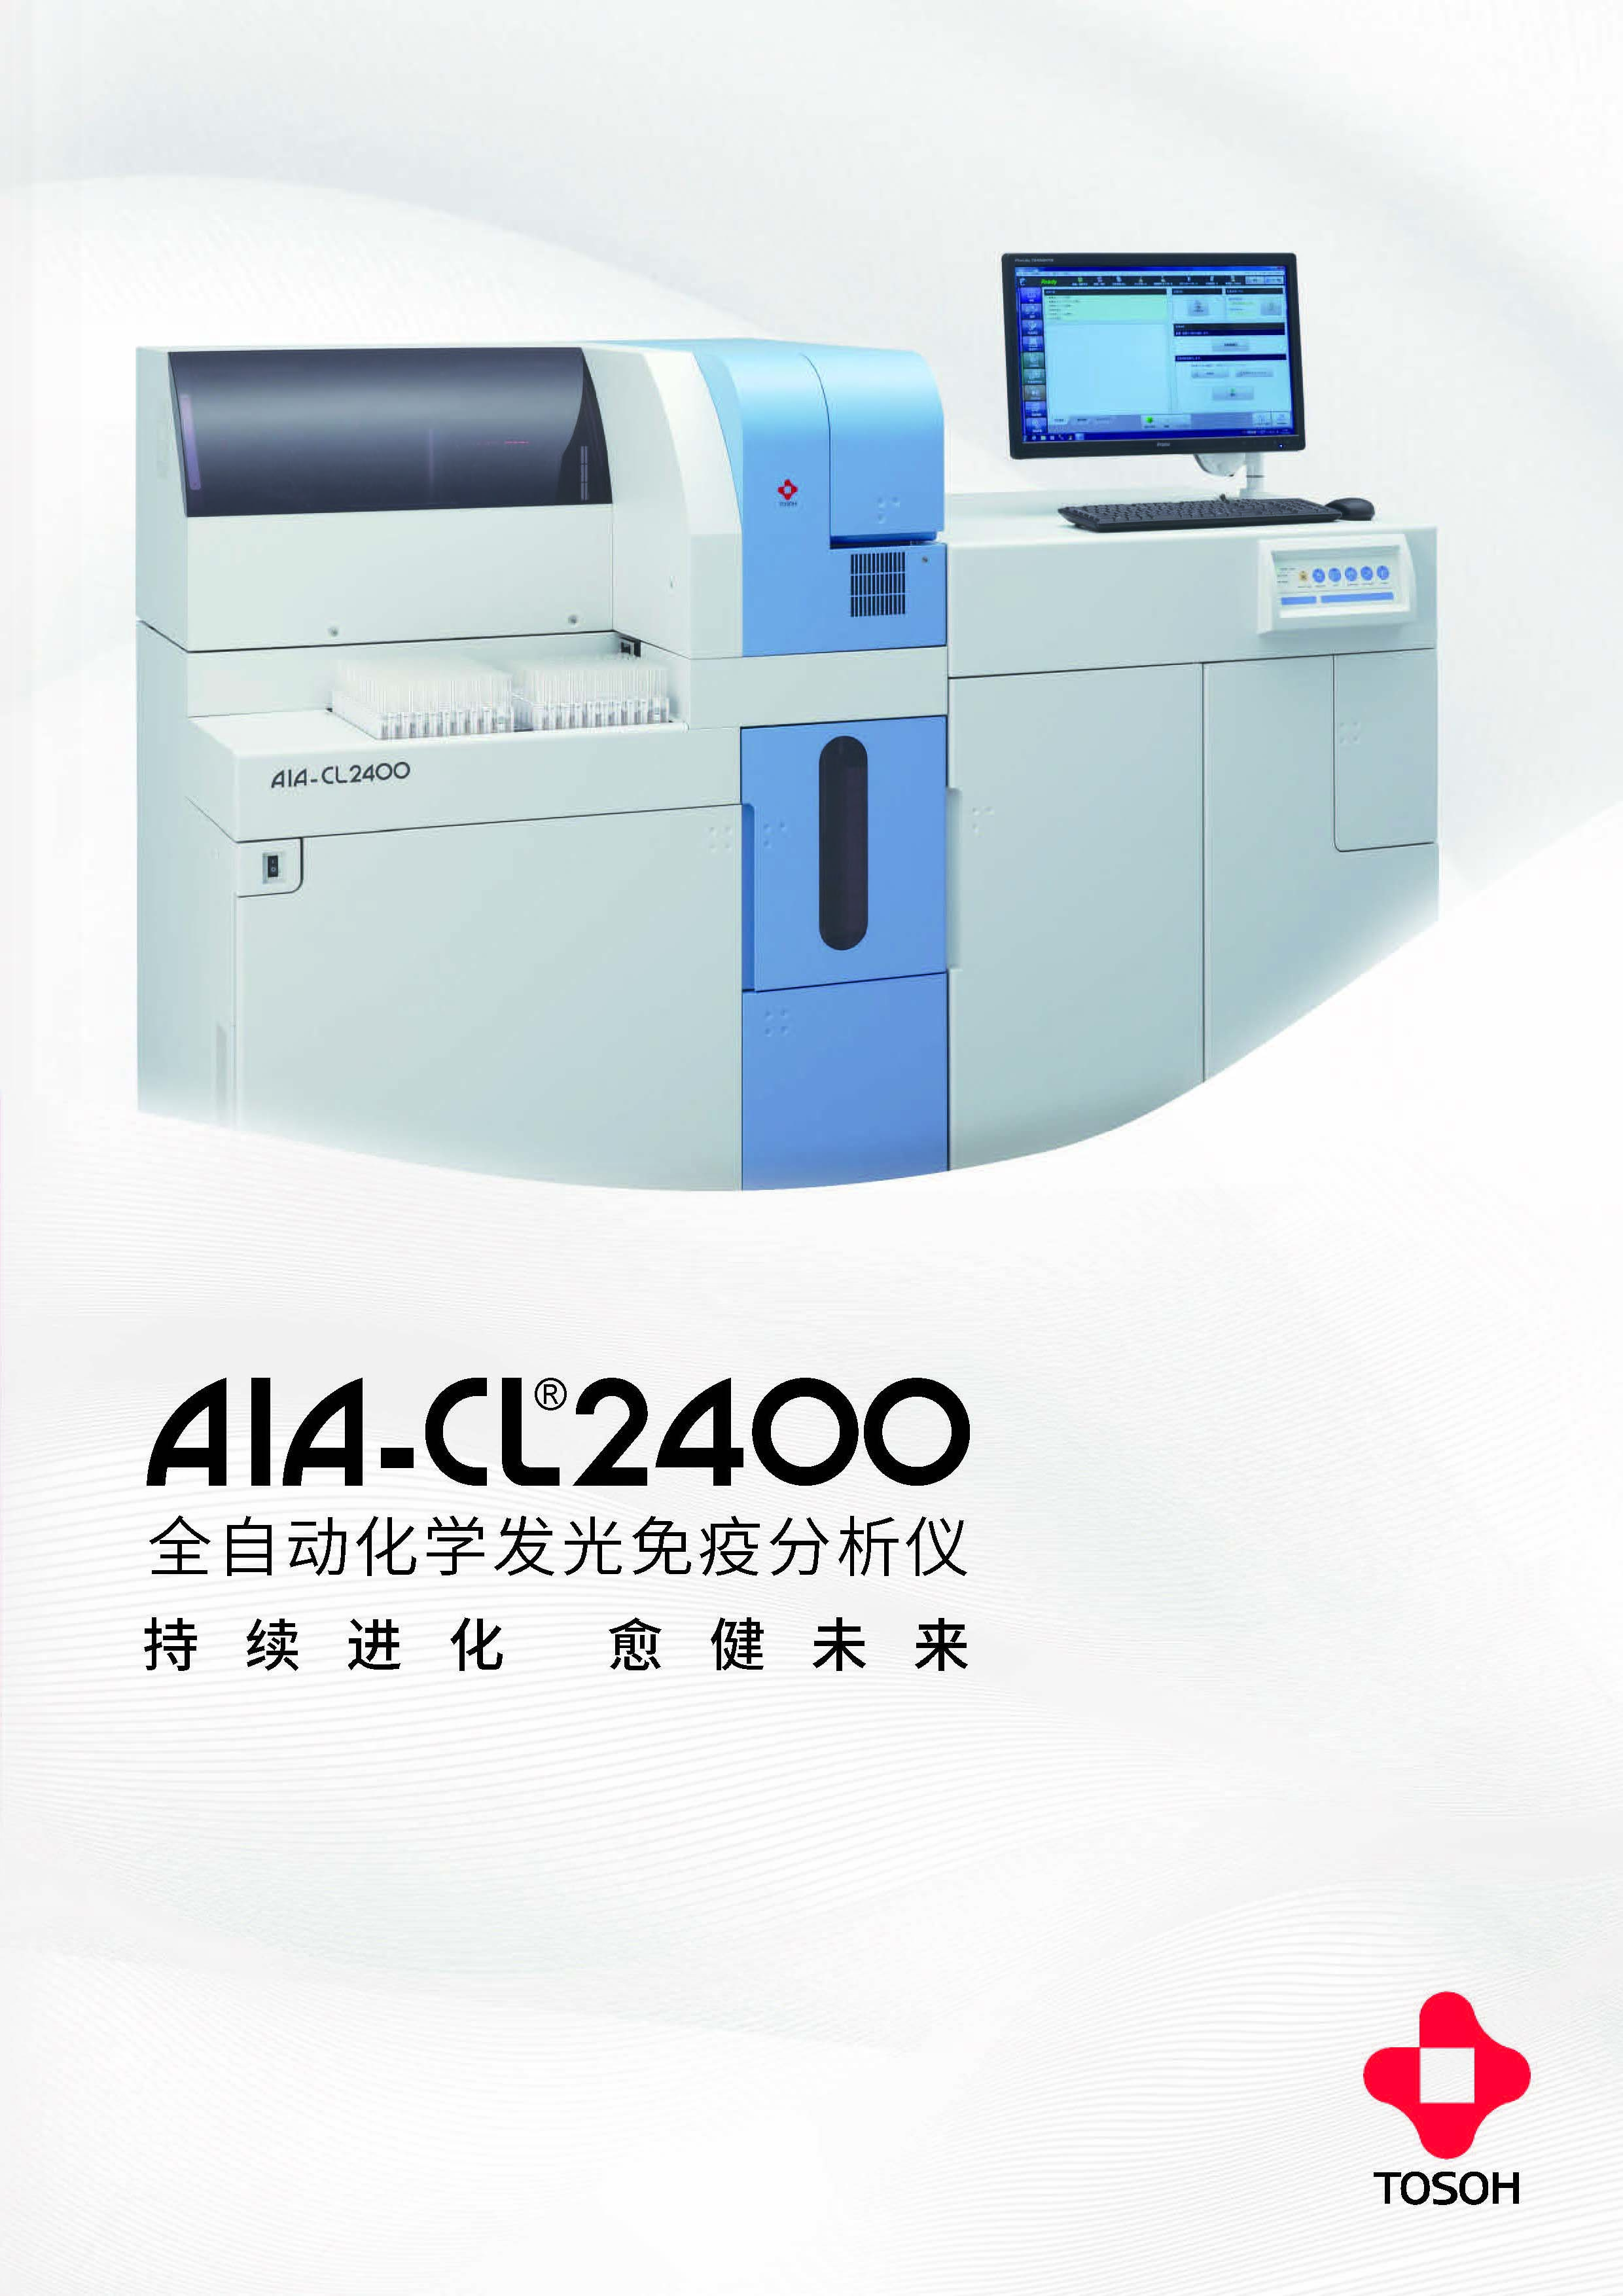 CL-2400 brochure.jpg